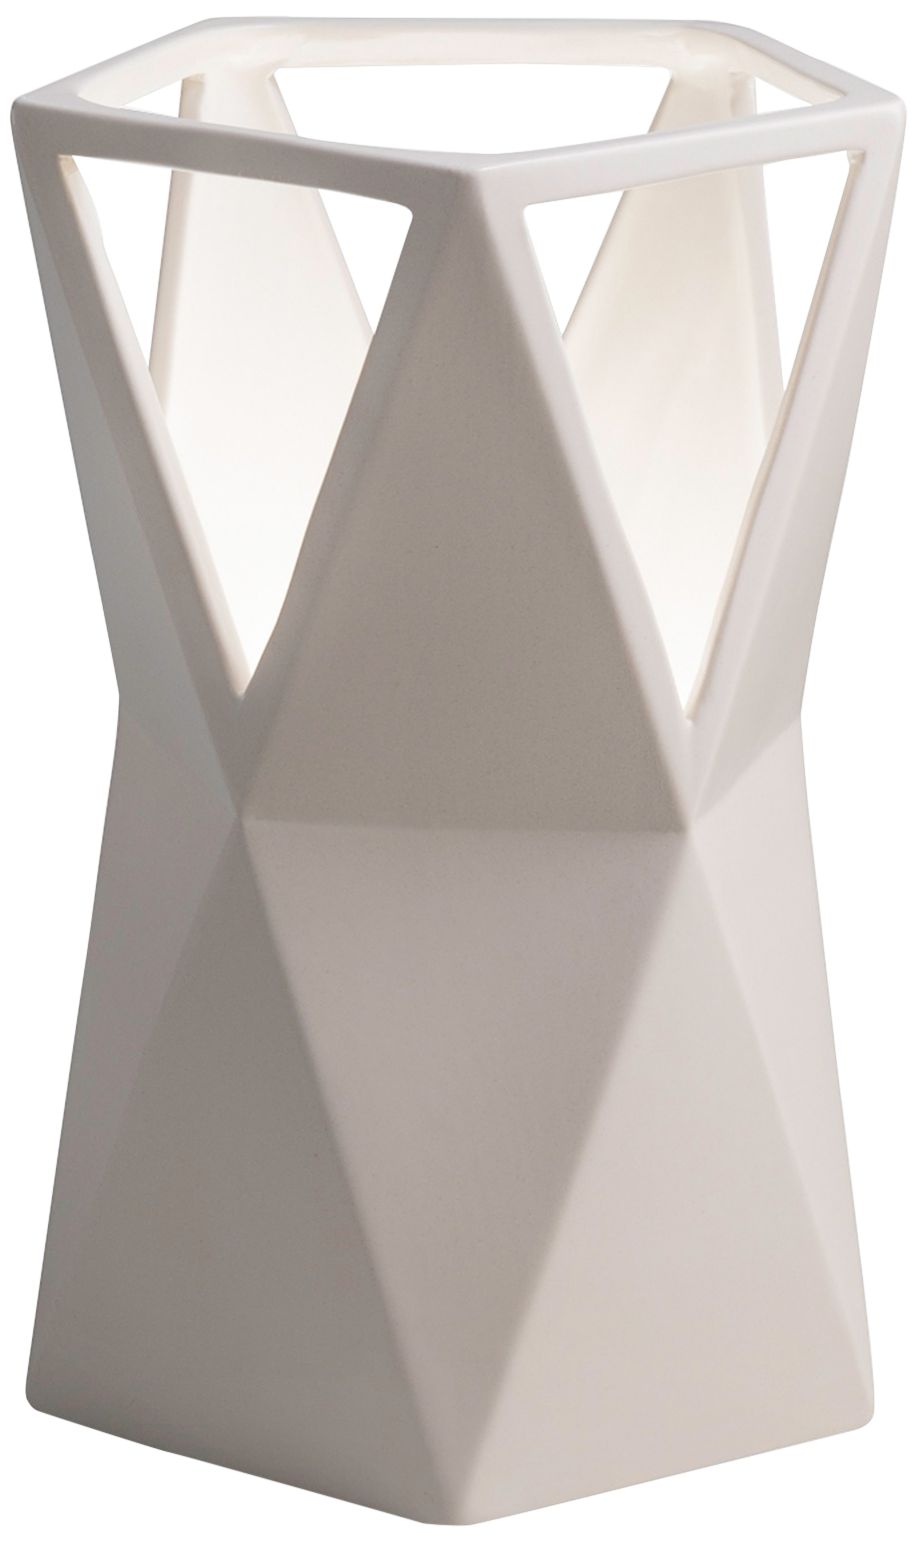 Totem 11 3/4" High Matte White Ceramic Portable LED Accent Table Lamp